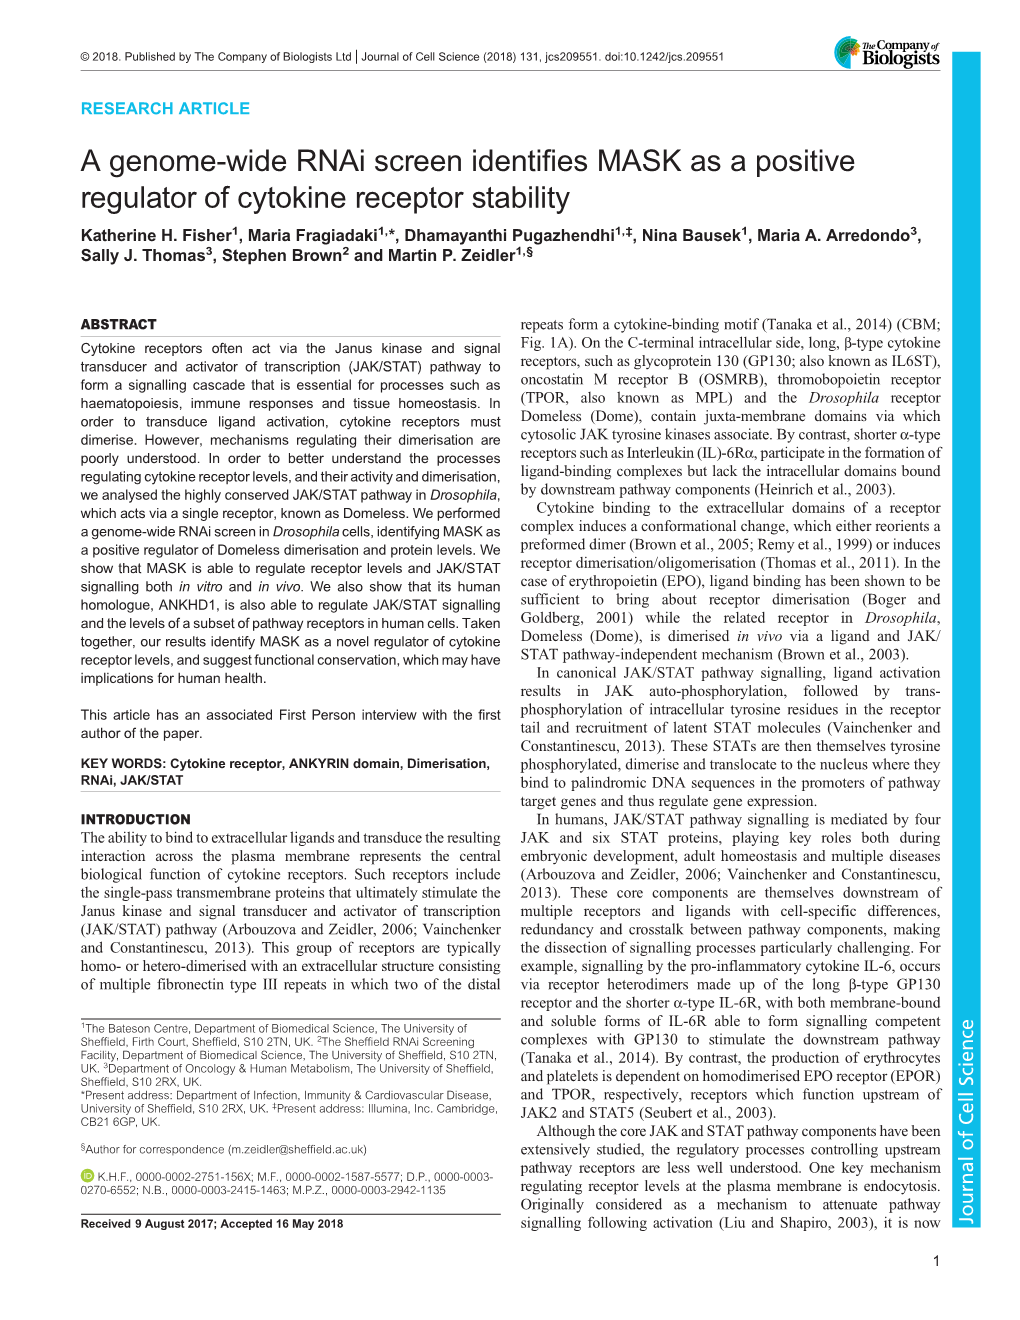 A Genome-Wide Rnai Screen Identifies MASK As a Positive Regulator of Cytokine Receptor Stability Katherine H